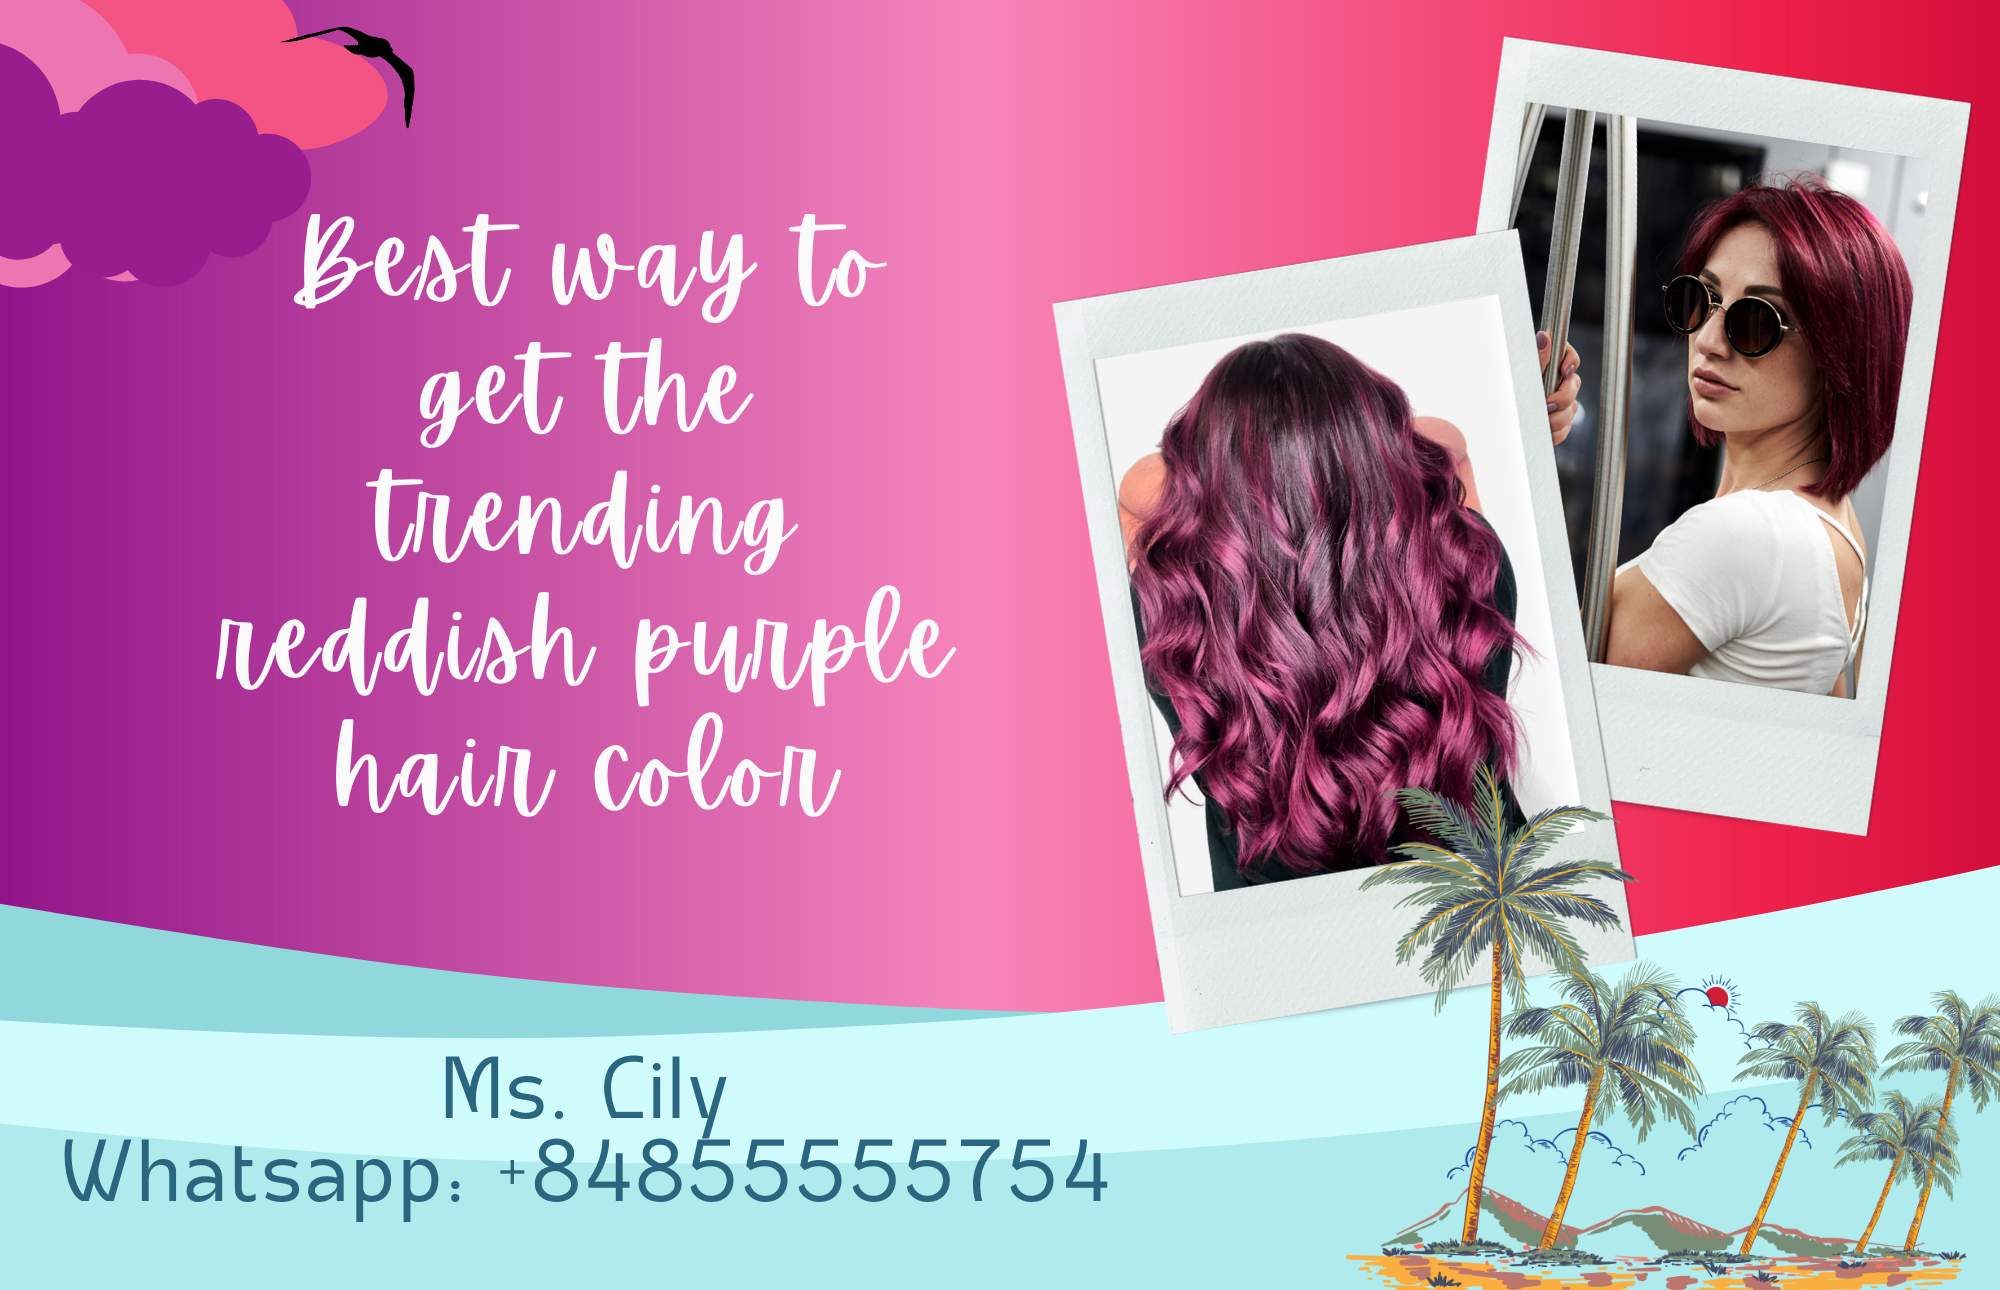 best-way-to-get-the-trending-reddish-purple-hair-color